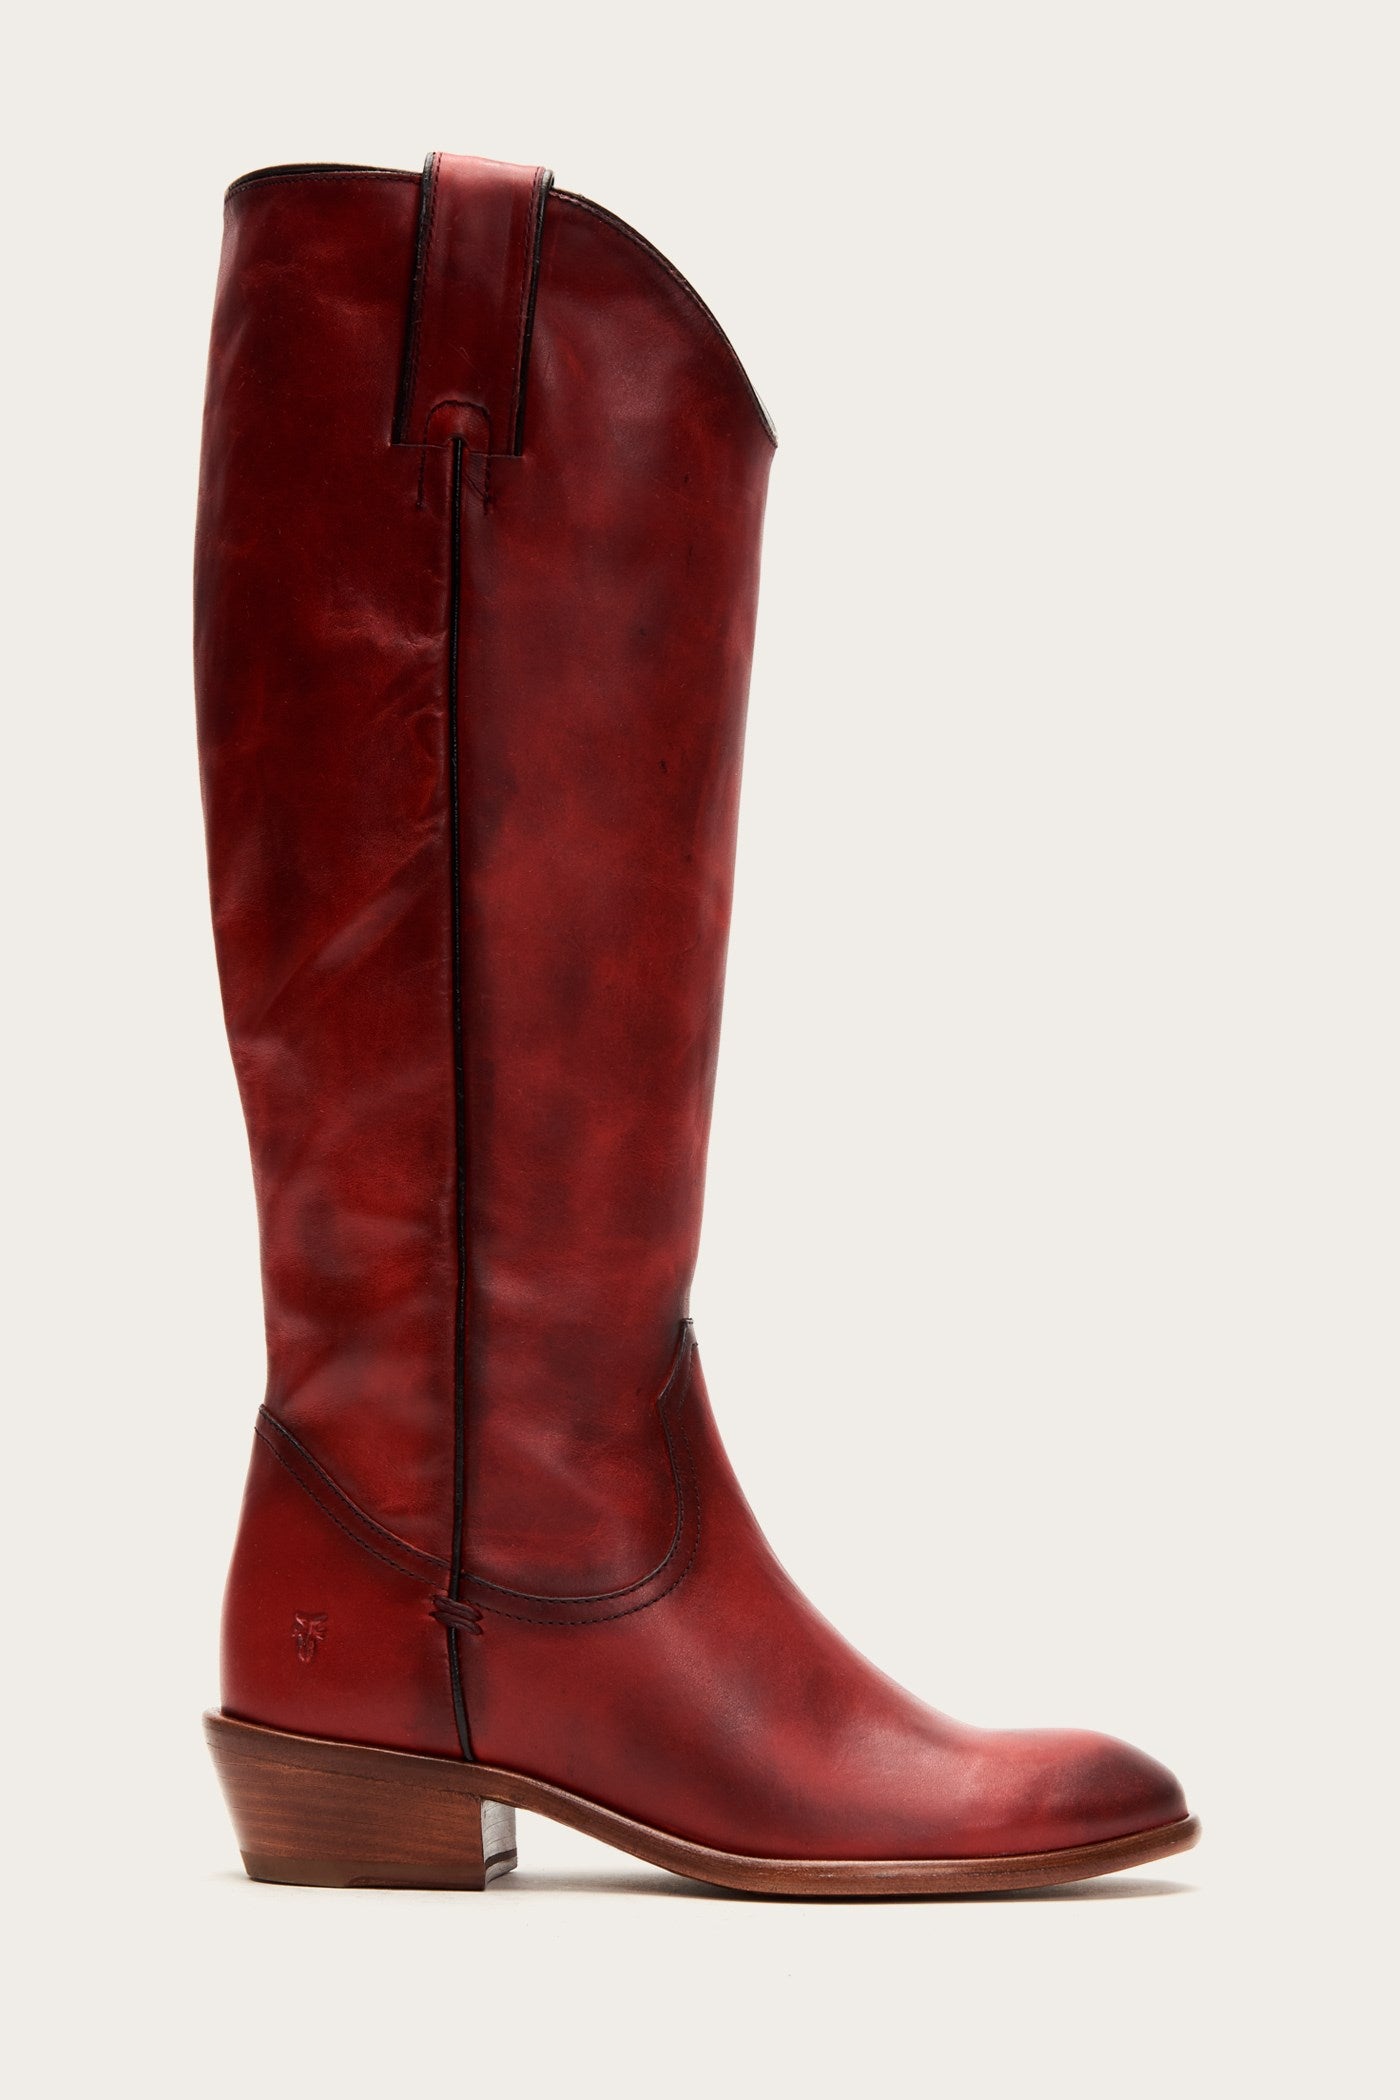 frye womens boots canada